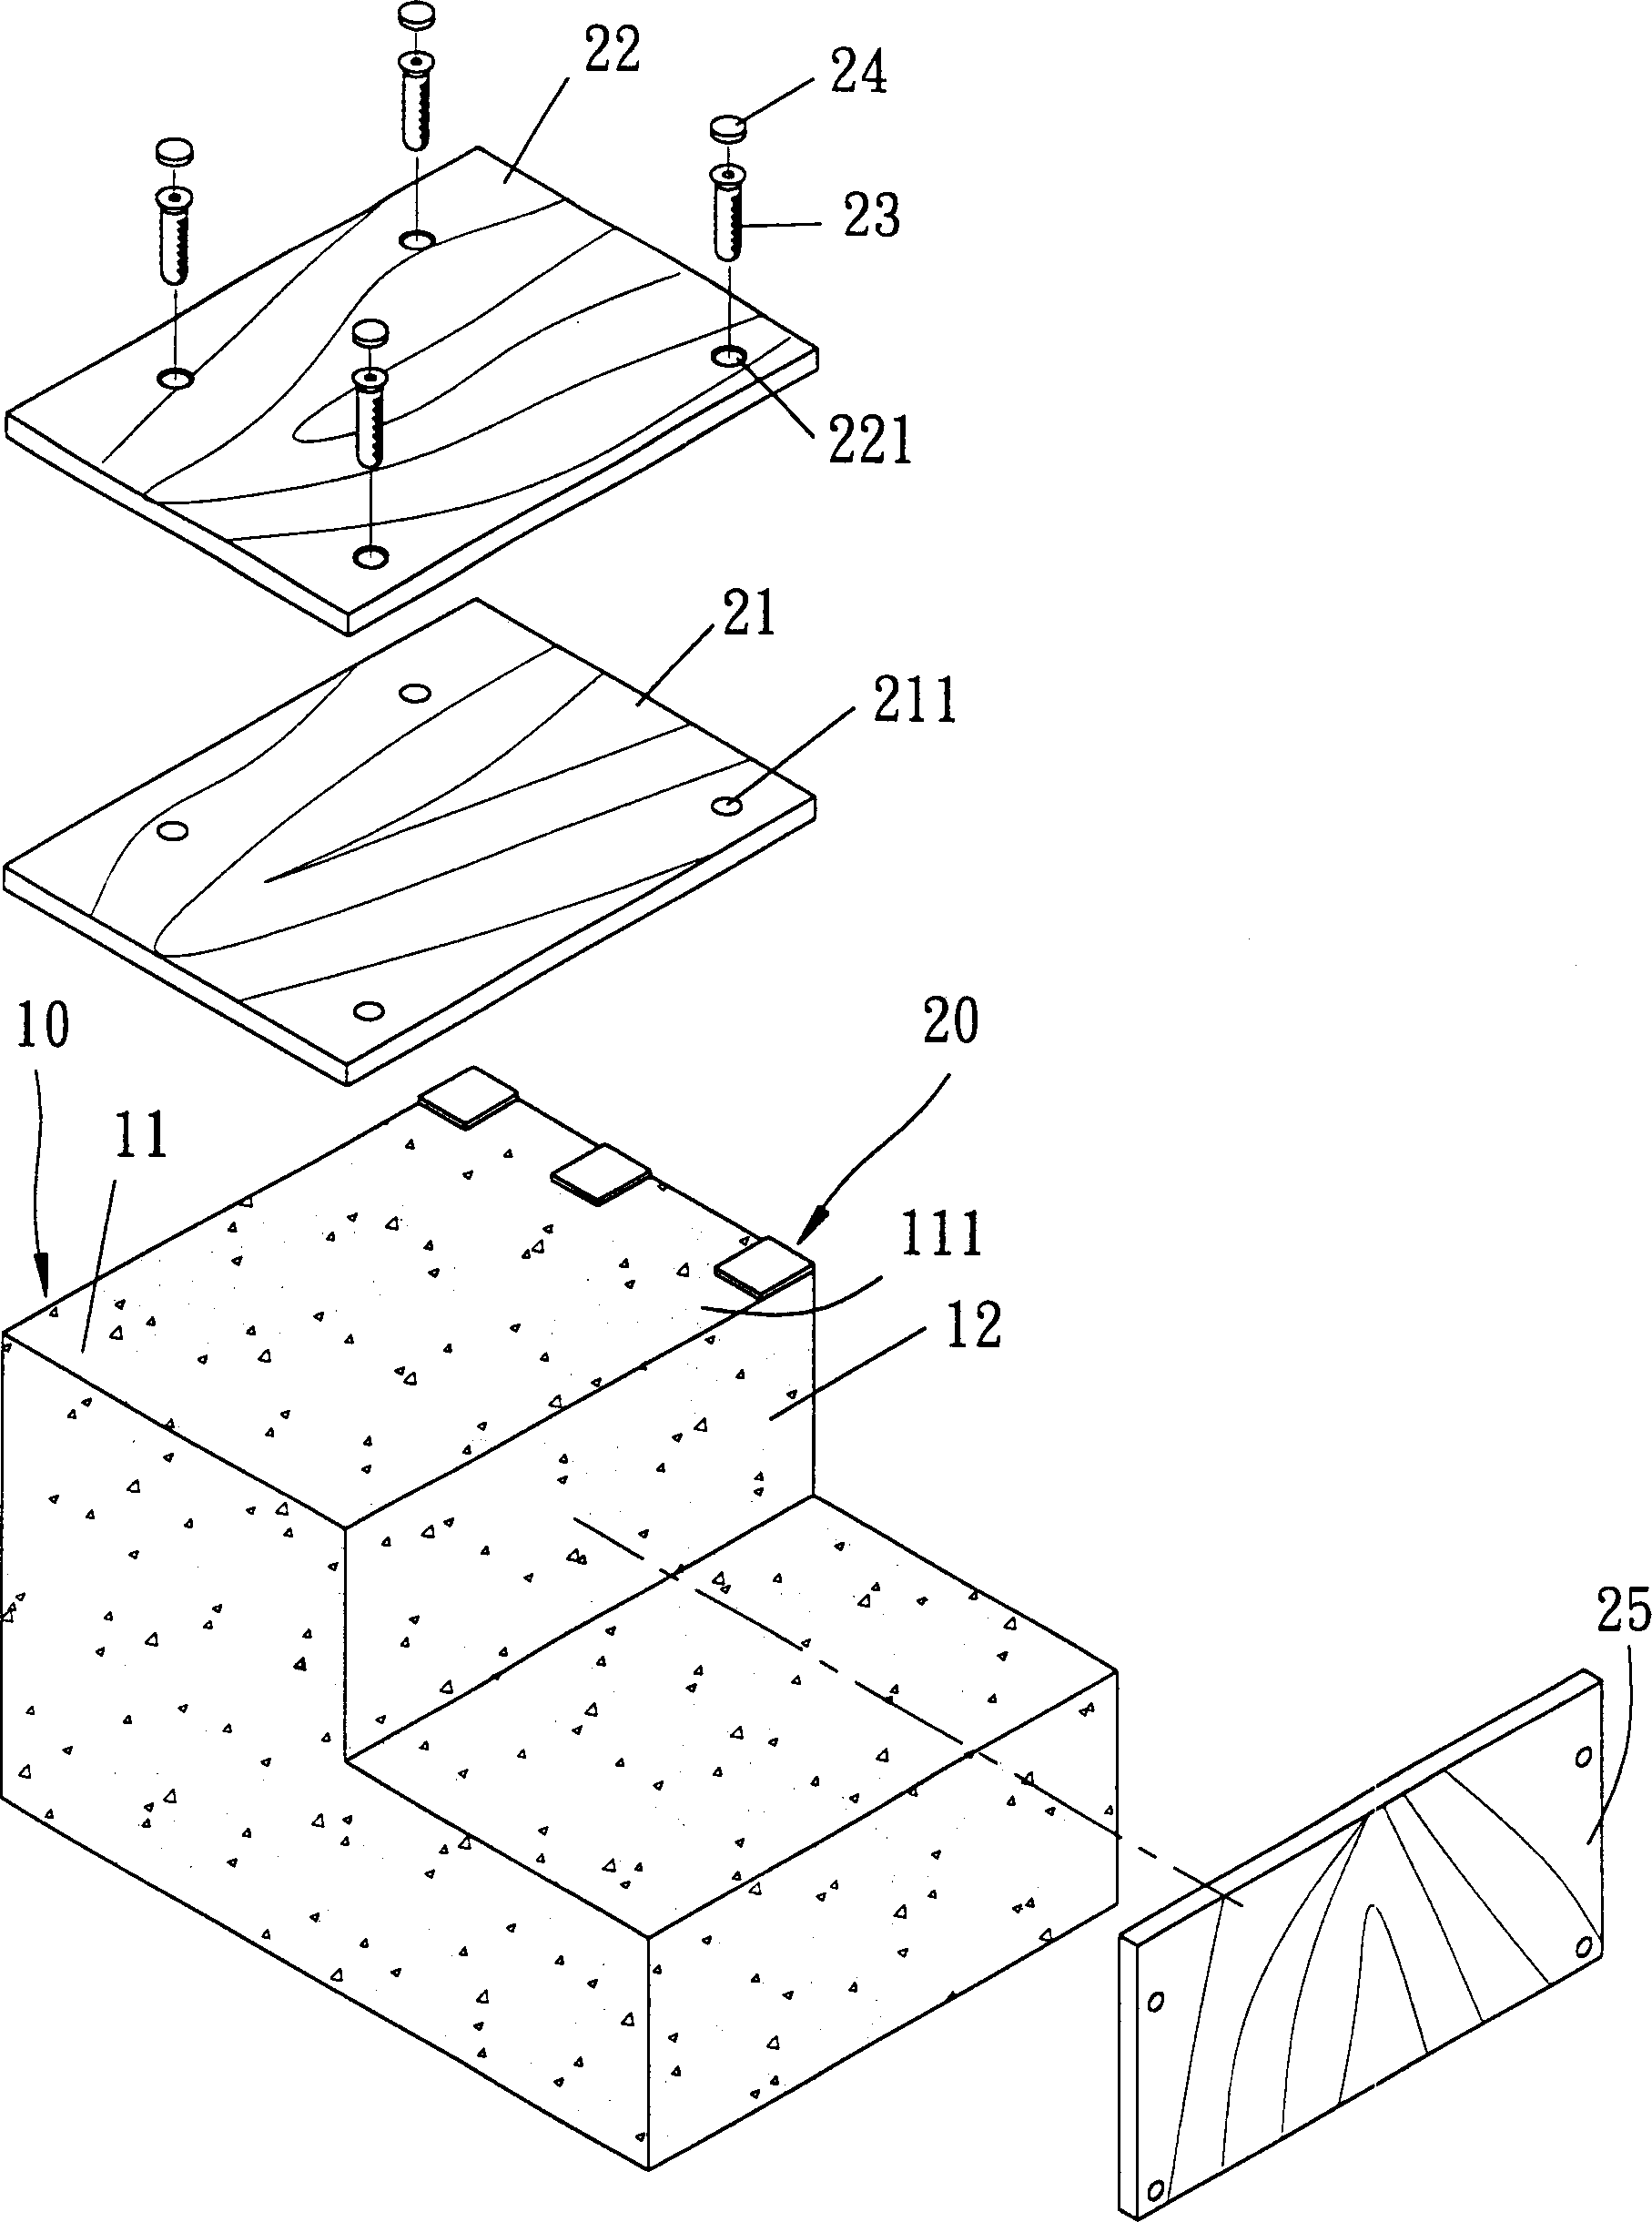 Modular stair tread and construction method